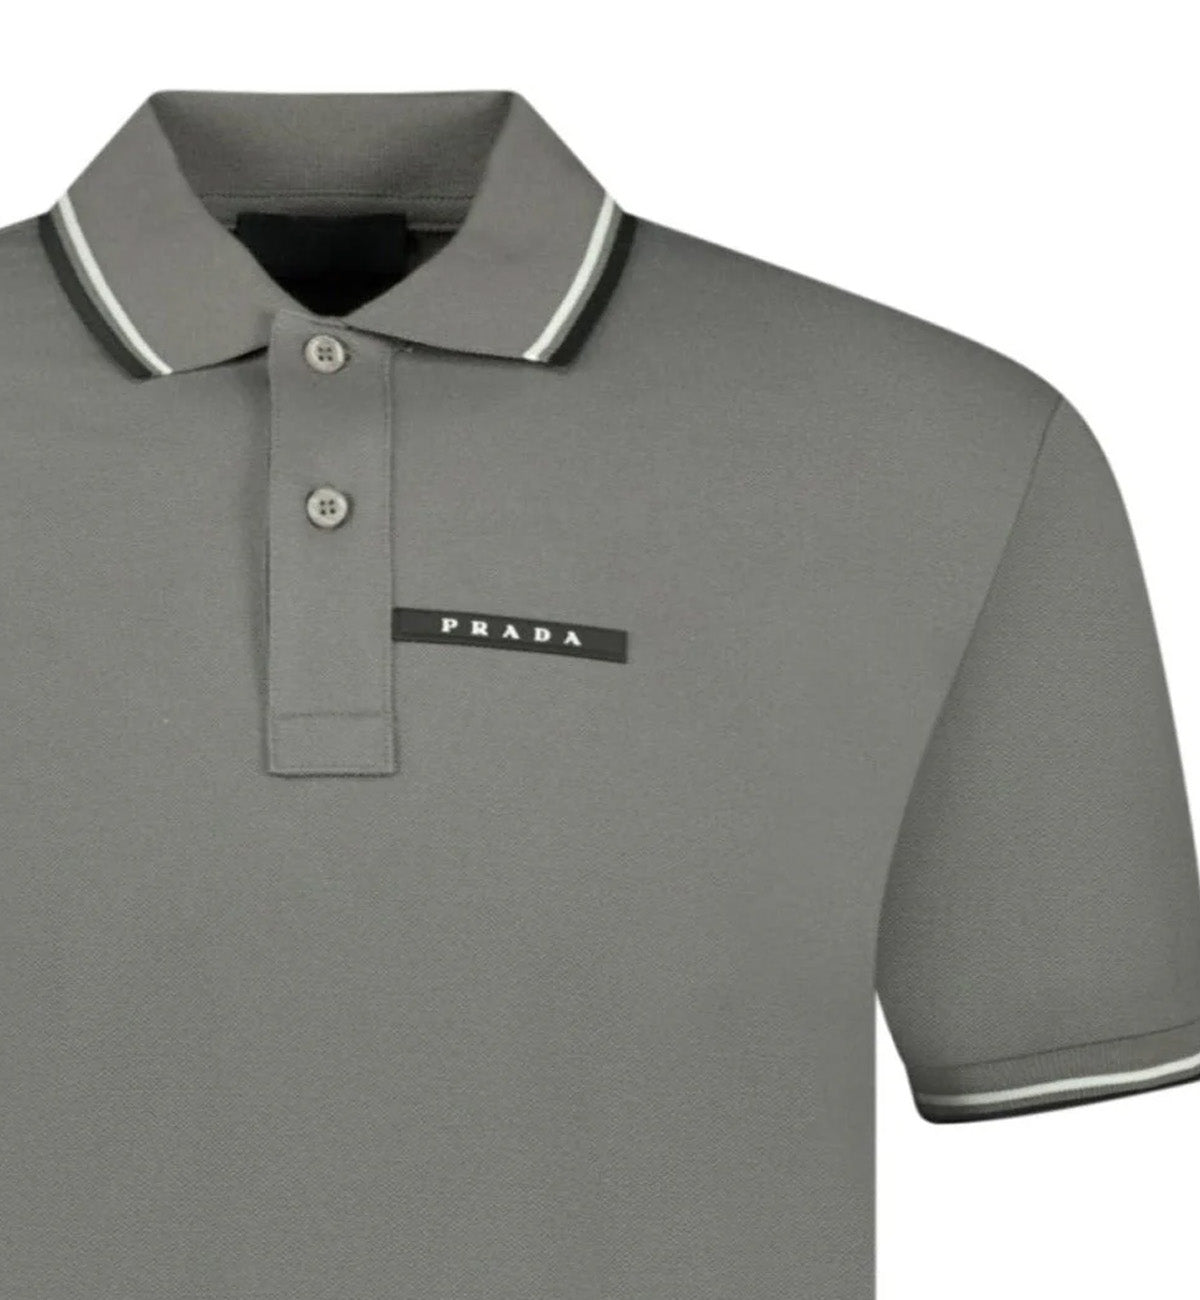 Prada Polo Shirt (Grey)